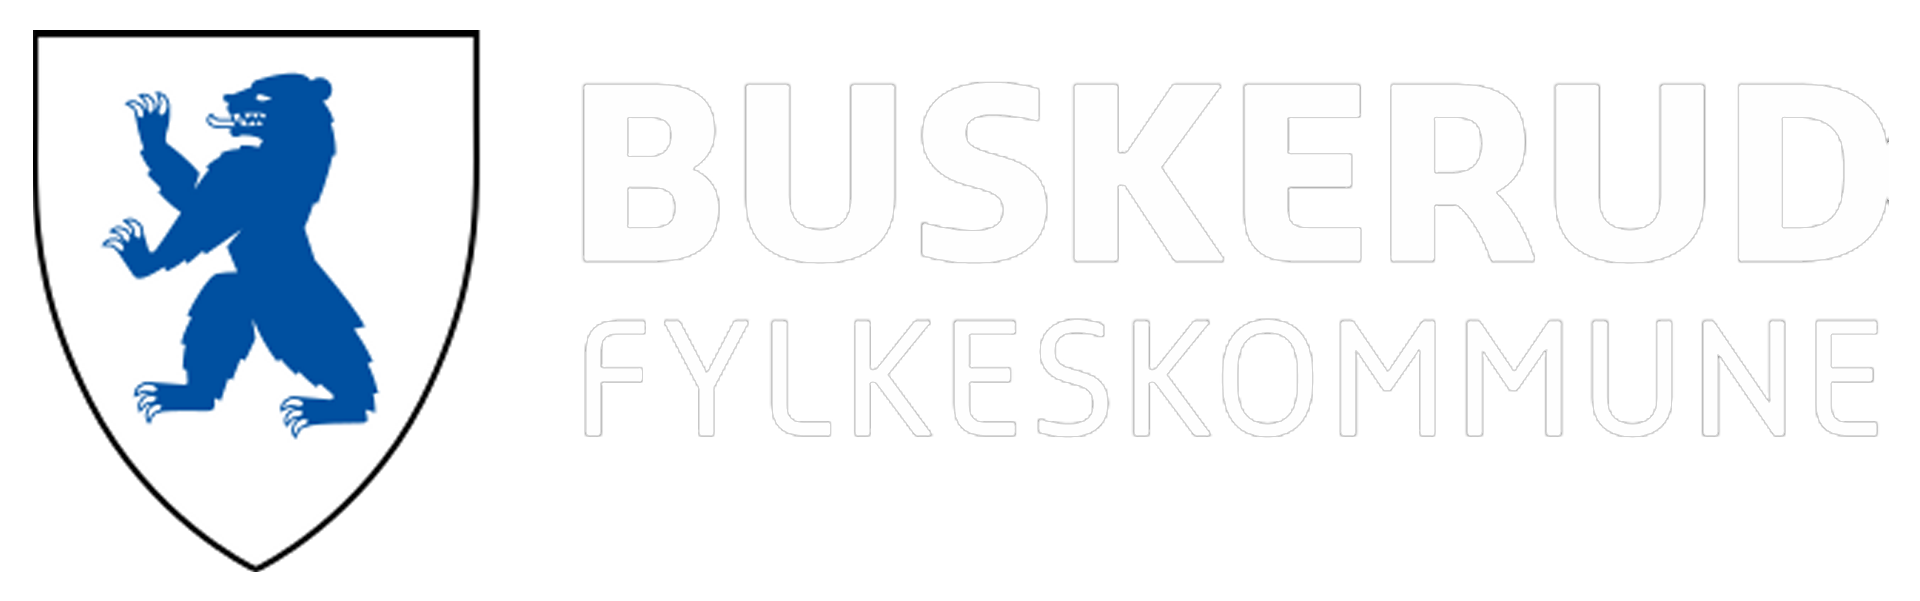 Buskerud Fylkeskommune logo